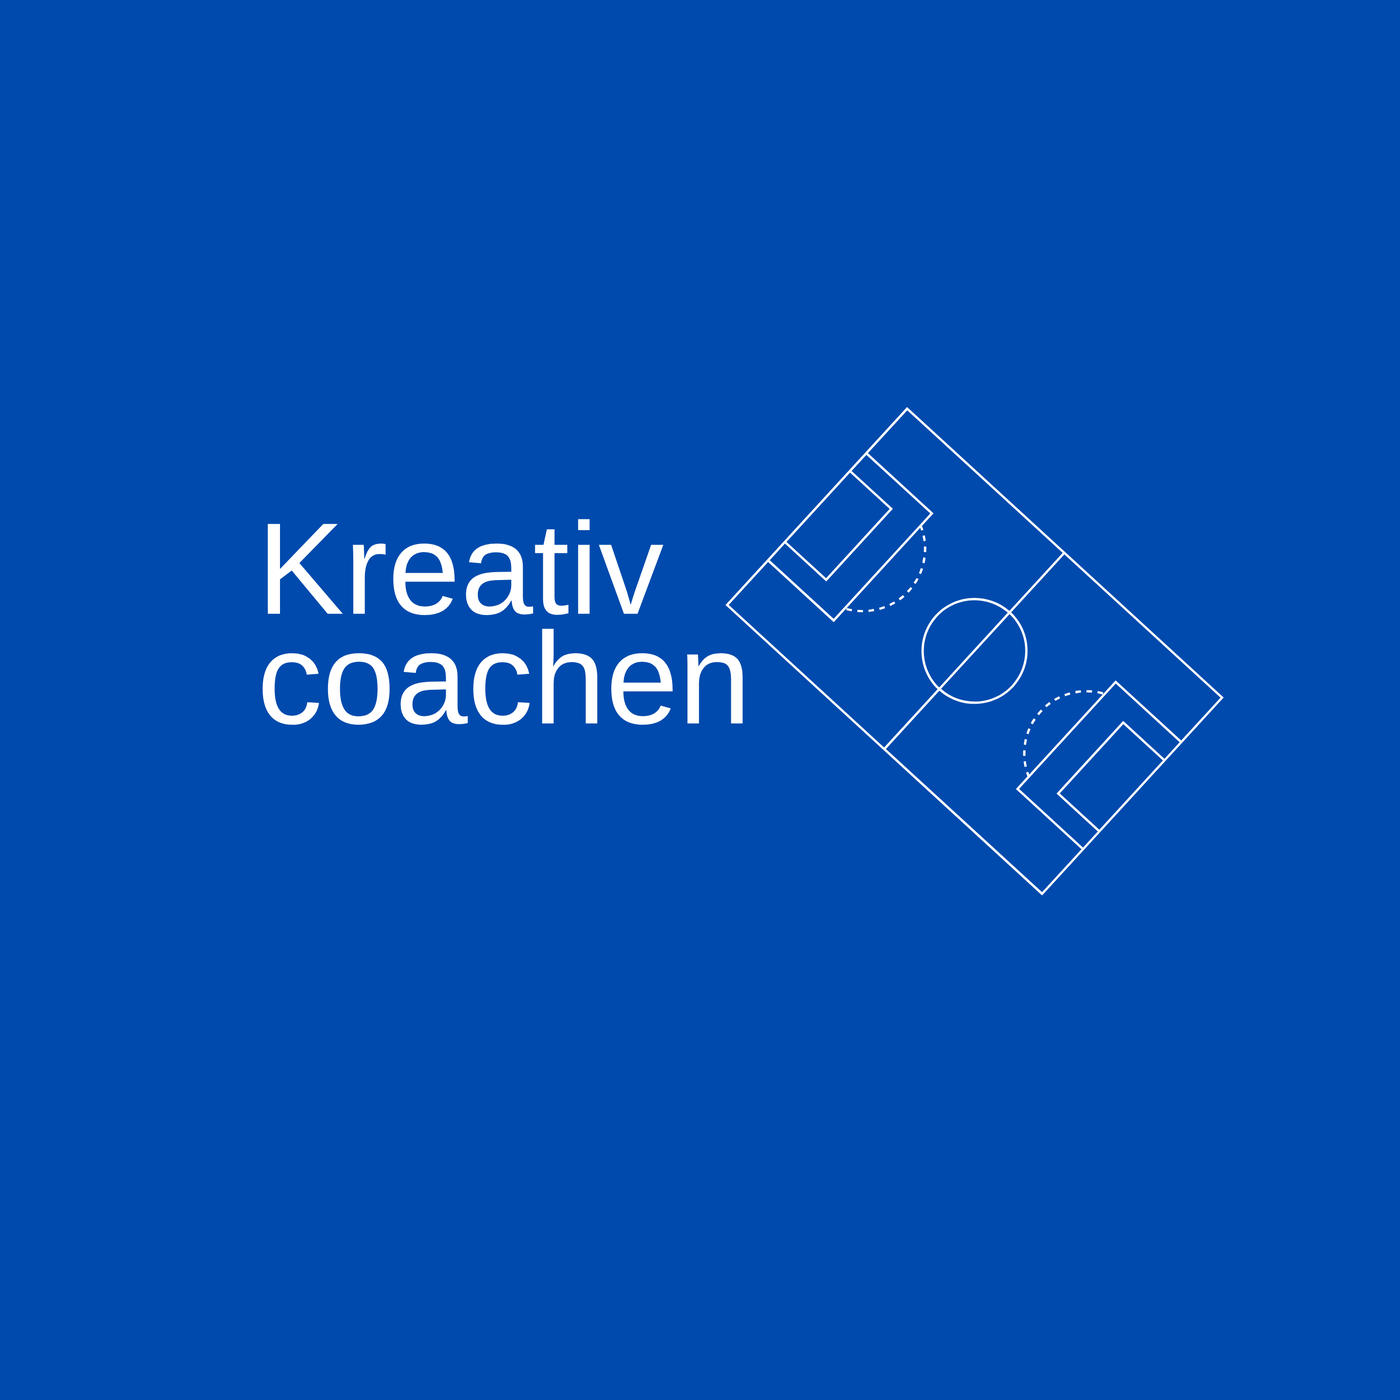 Kreativ coachen